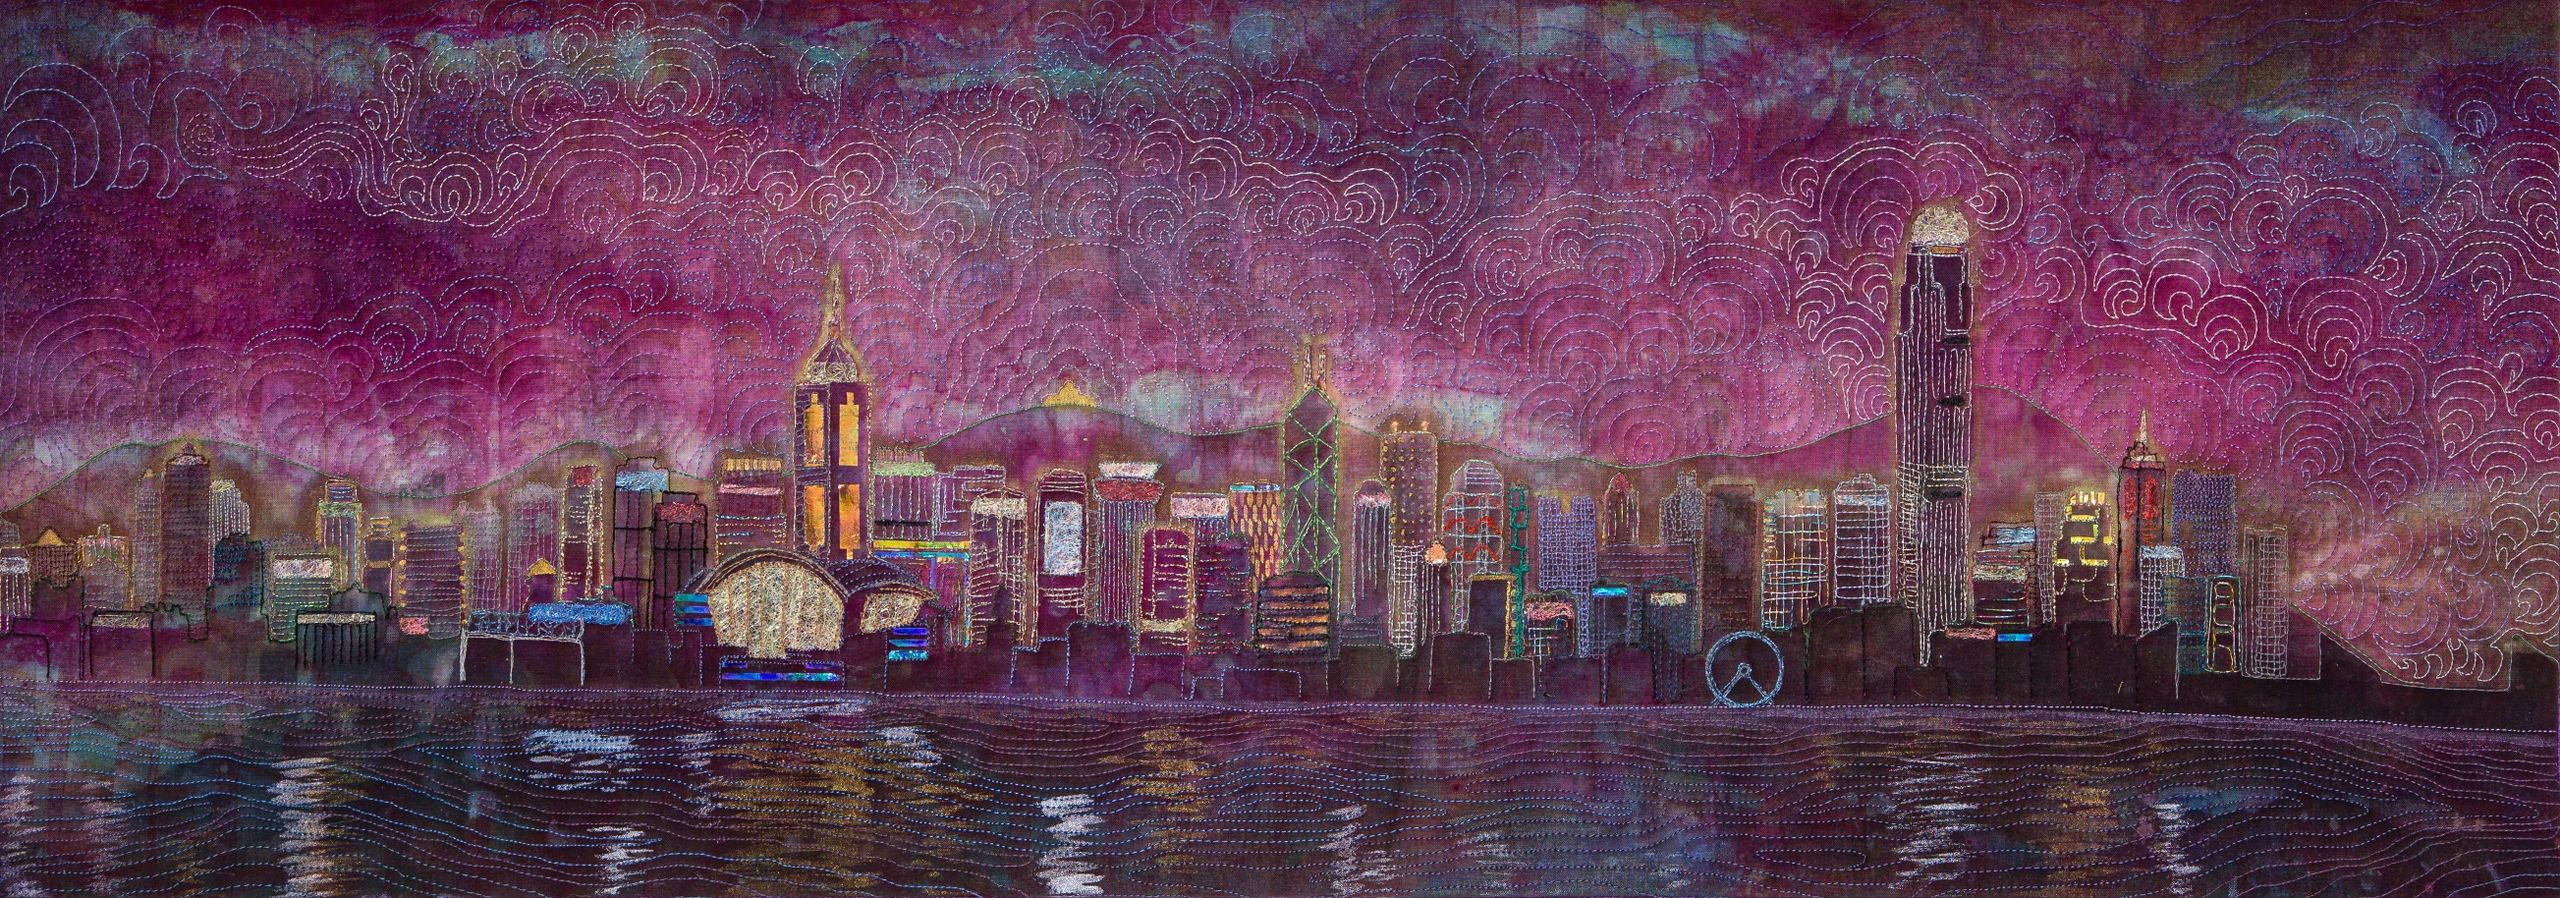 Cityscape, skyscrapers, art quilt, Hong Kong, moody purple, neons, LEDs, harbor, original art, fiber